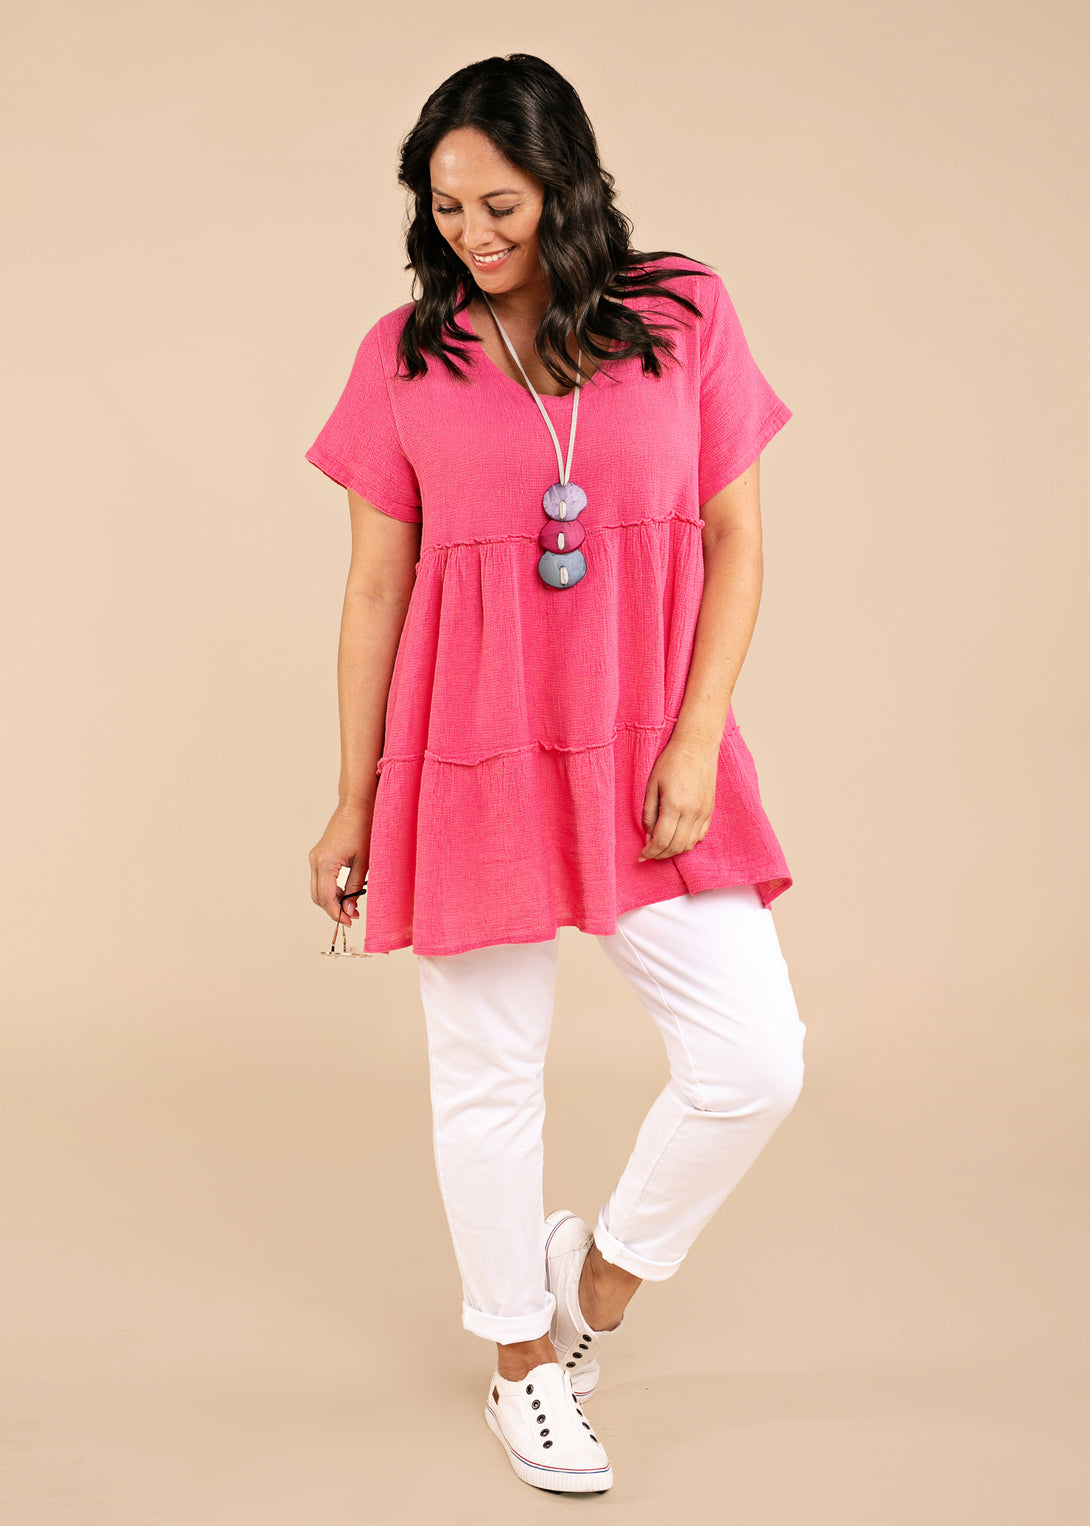 Nessa Linen V Neck Top in Raspberry Sorbet - Imagine Fashion